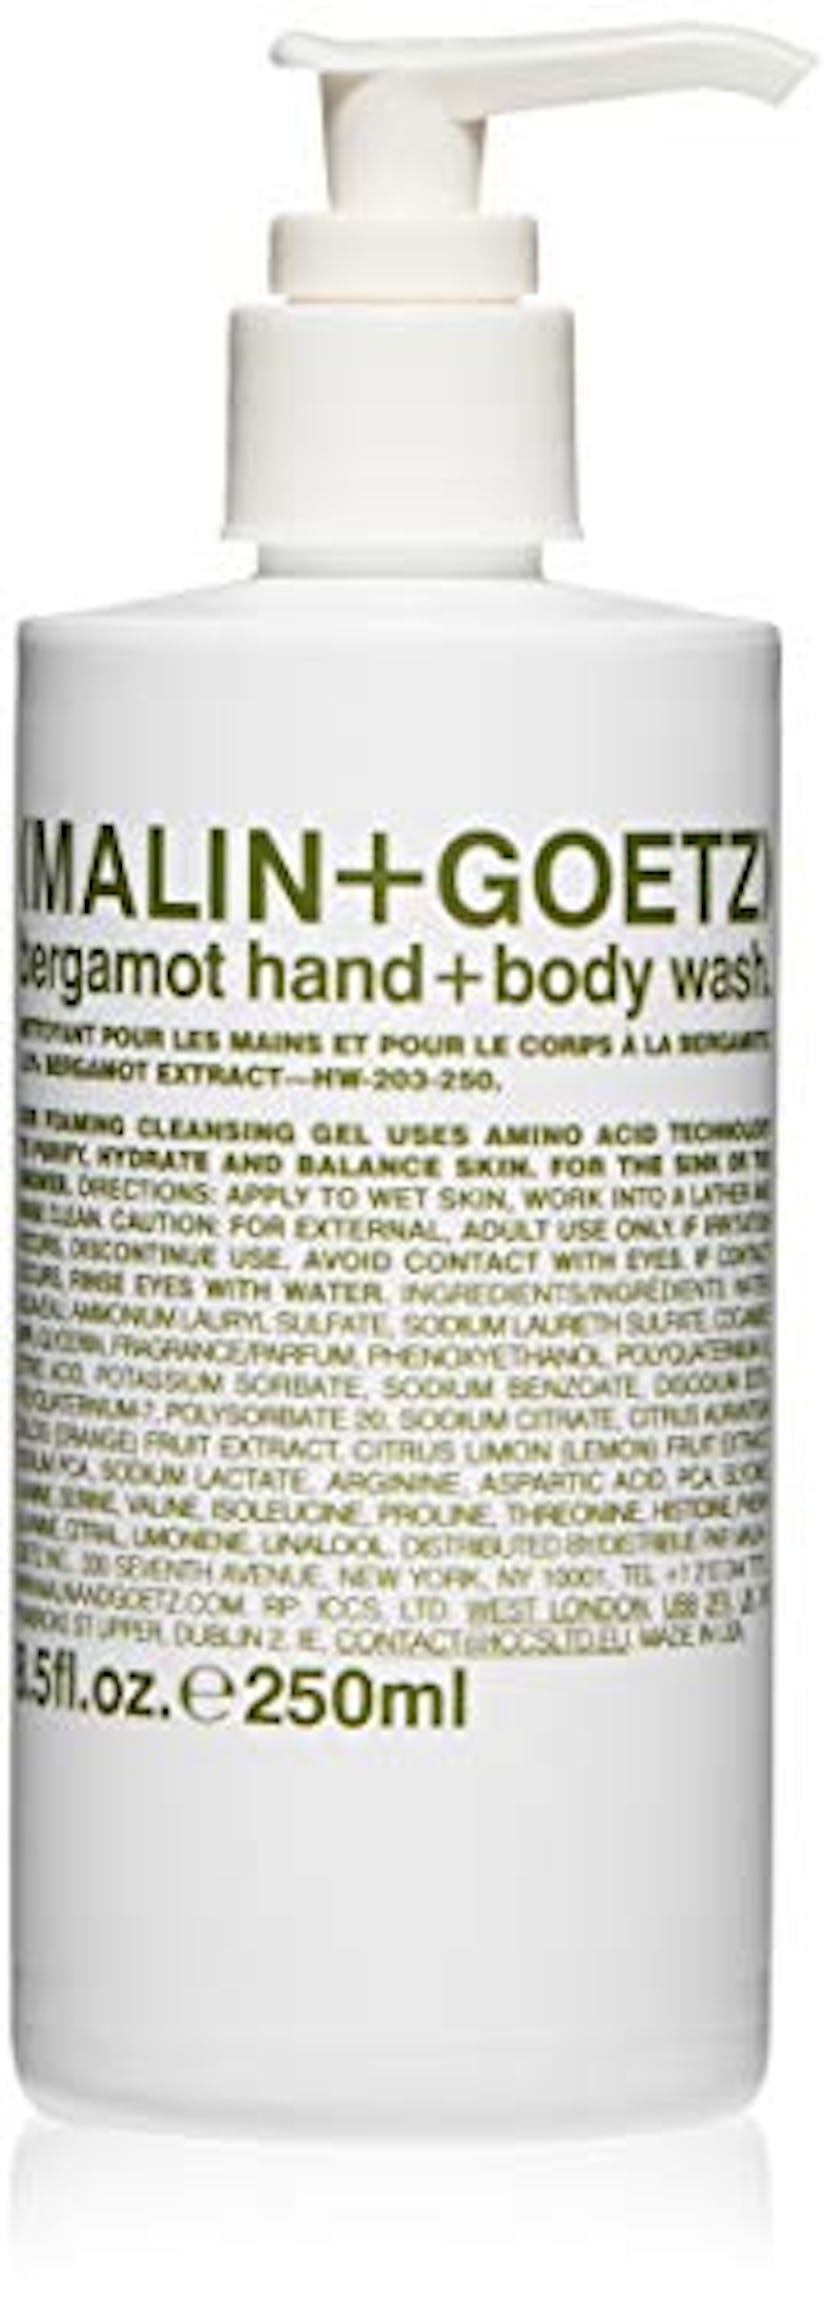 Malin + Goetz Essential Bergamot Hand + Body Wash